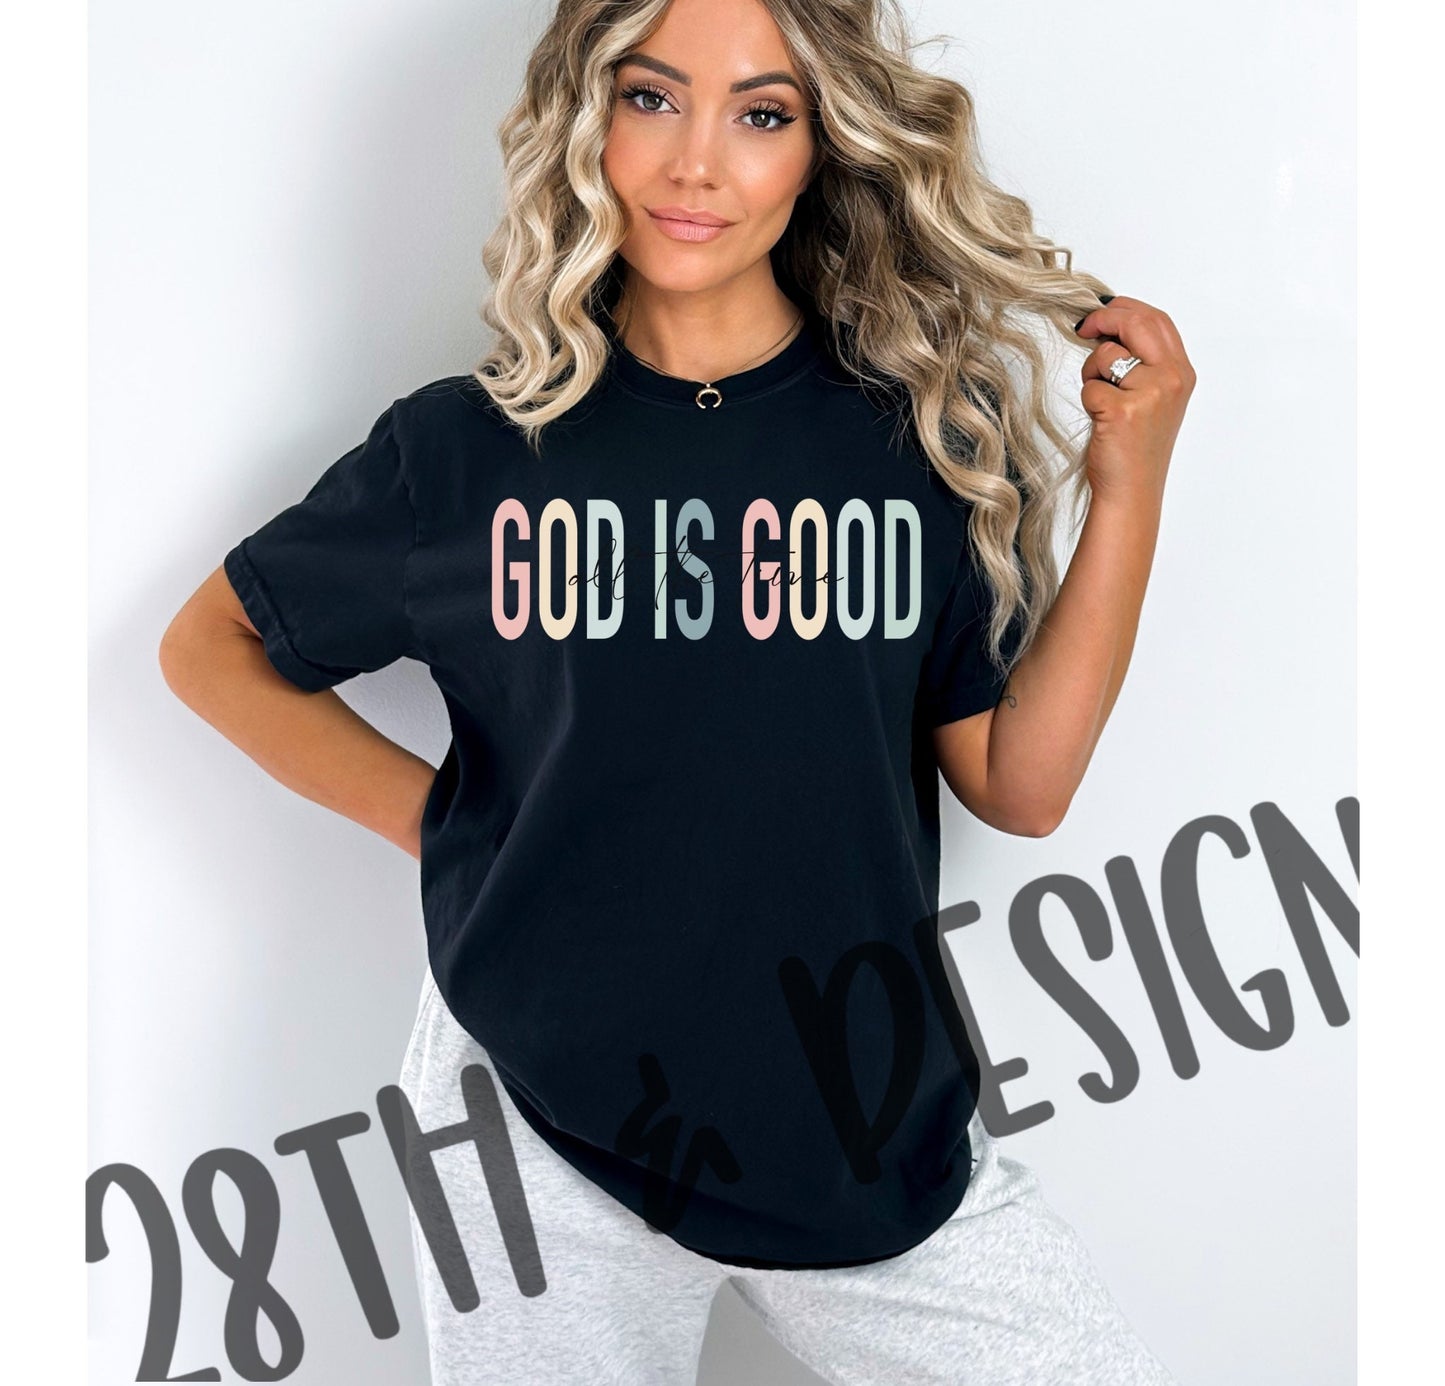 God is good all the time, sweatshirt or tee